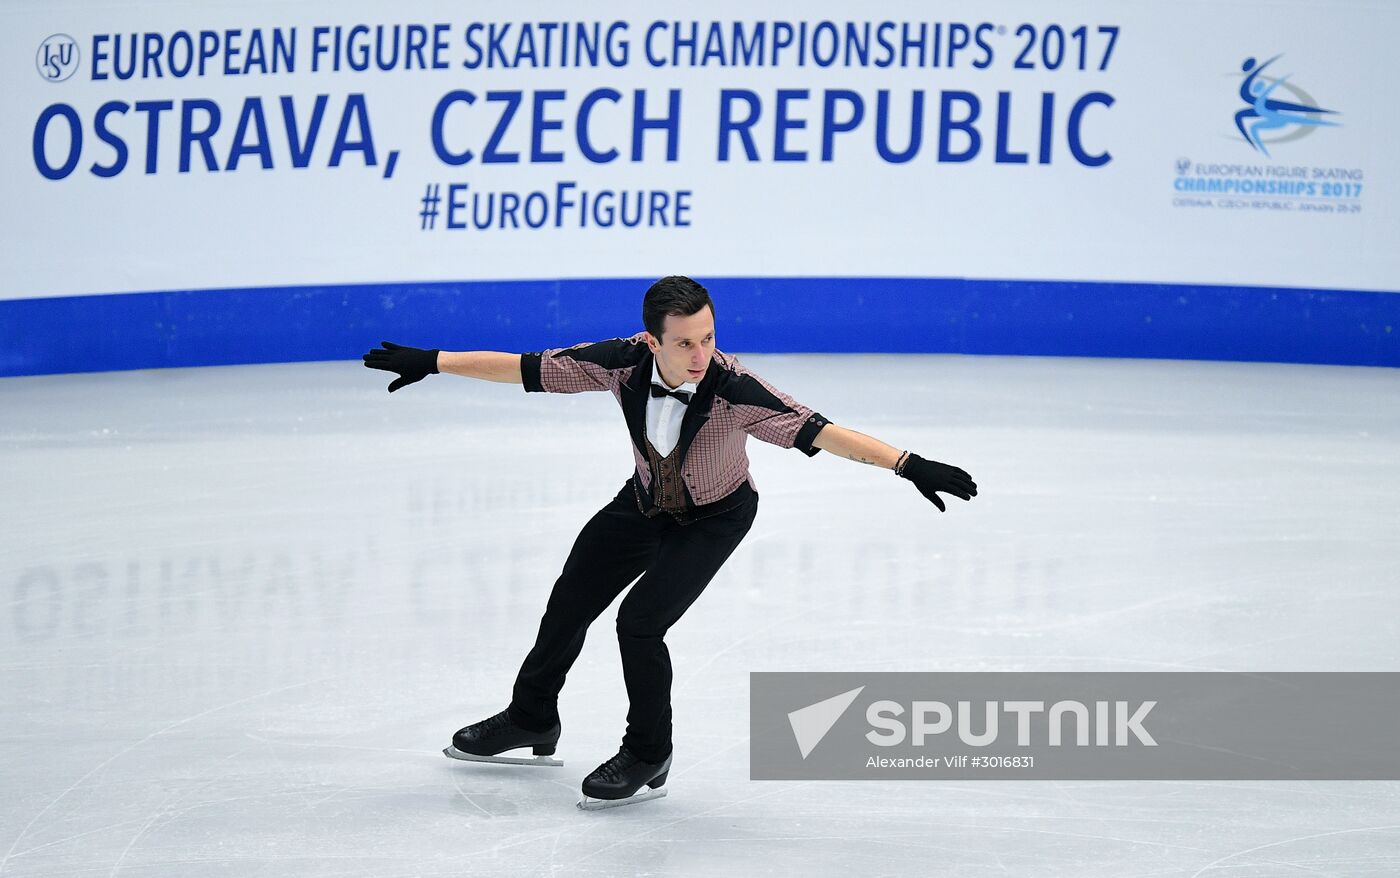 European Figure Skating Championship. Men's short program